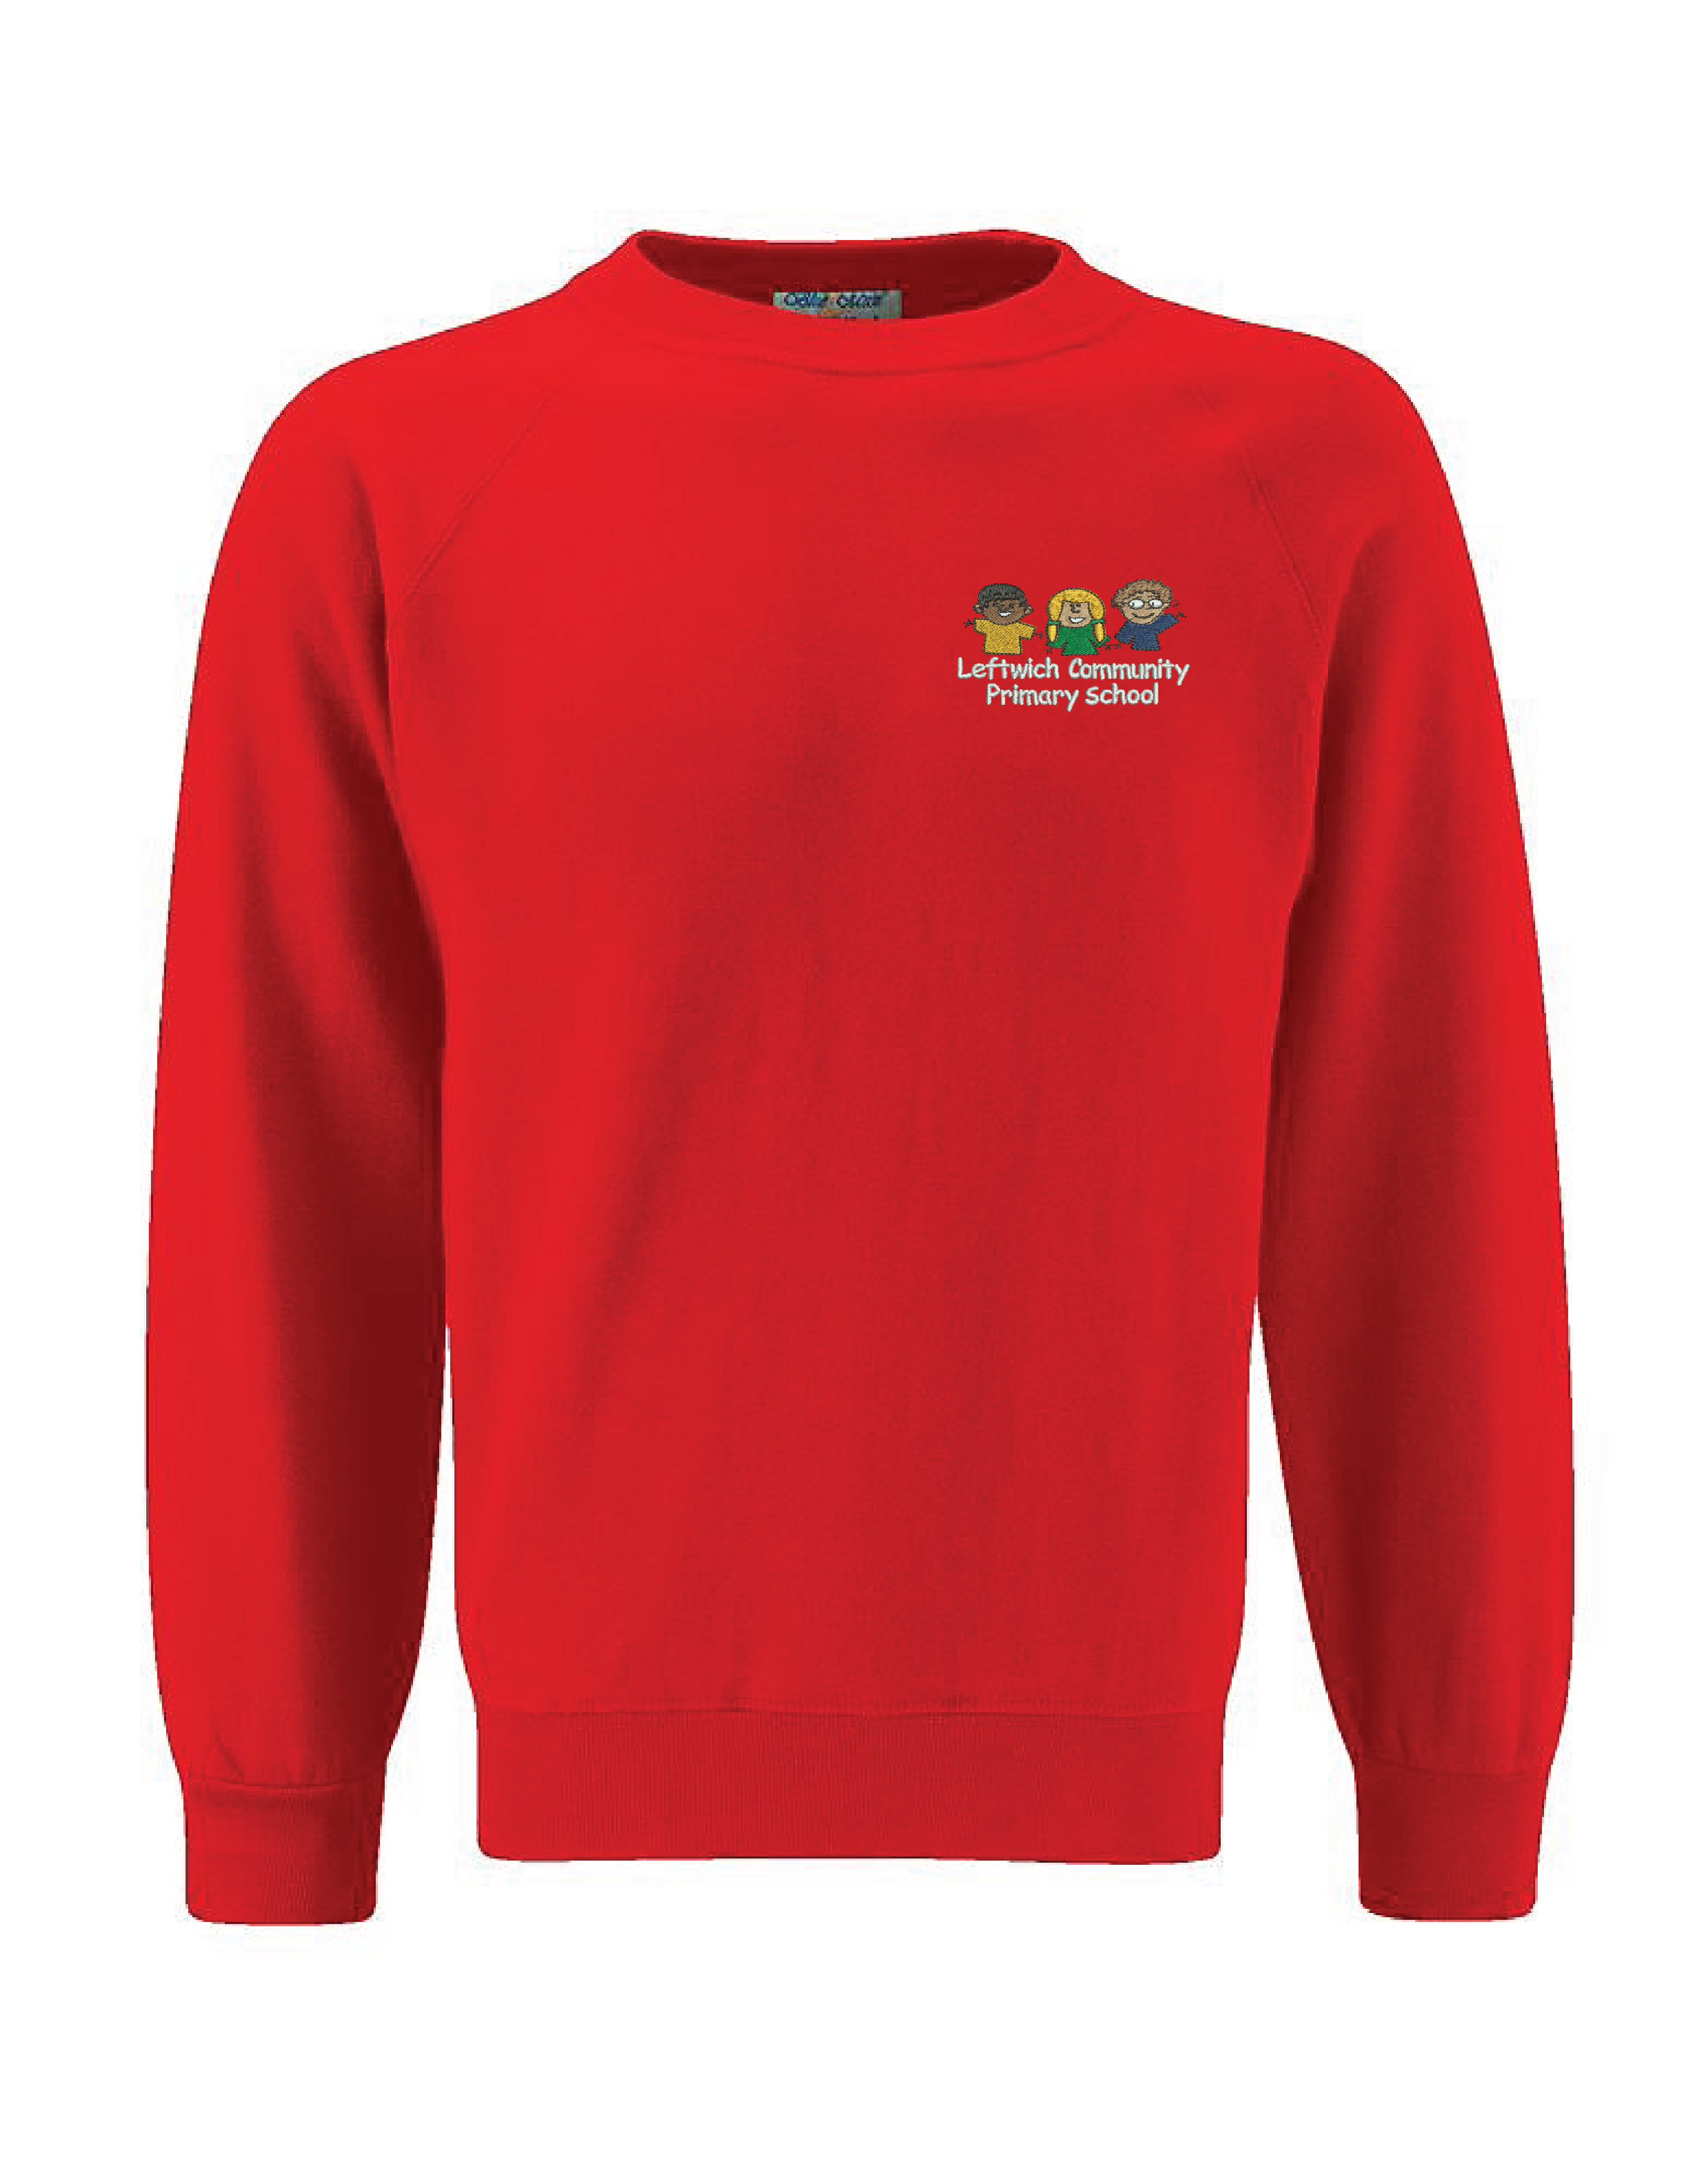 Leftwich Primary School Sweatshirt